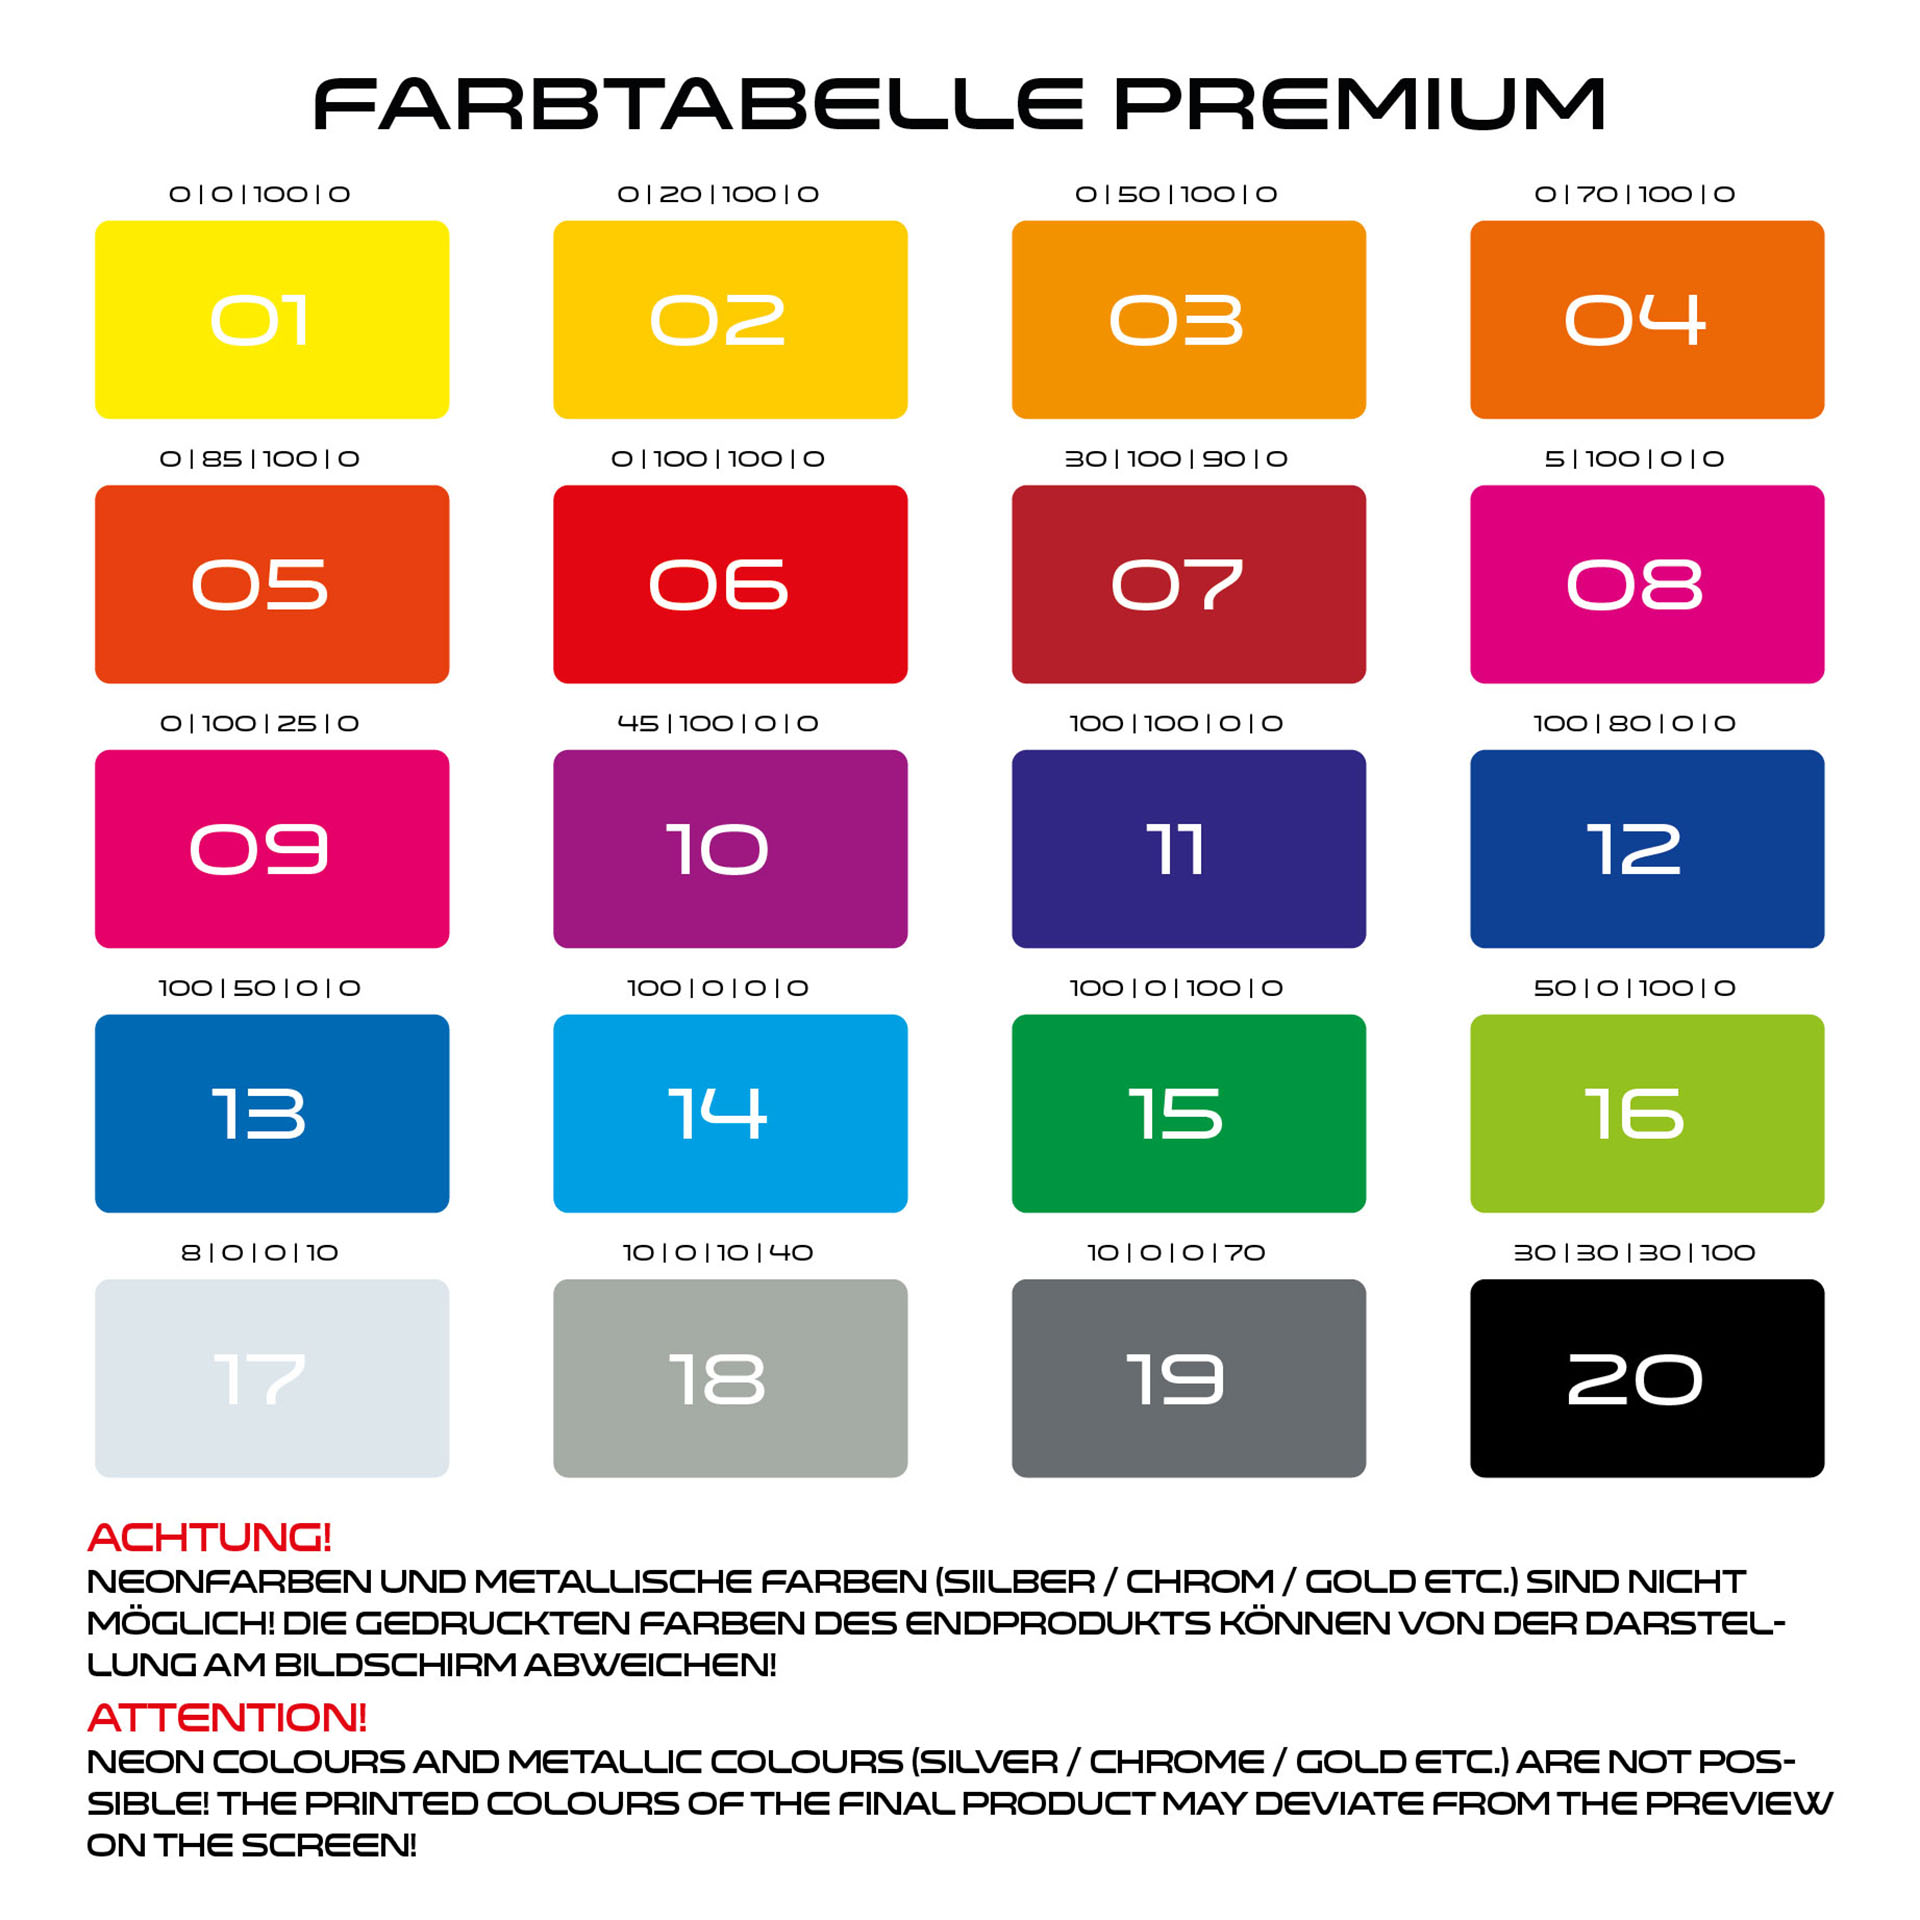 RACING V4 Felgenaufkleber Premium geteilt Farbtabelle Premium Wheelsticker